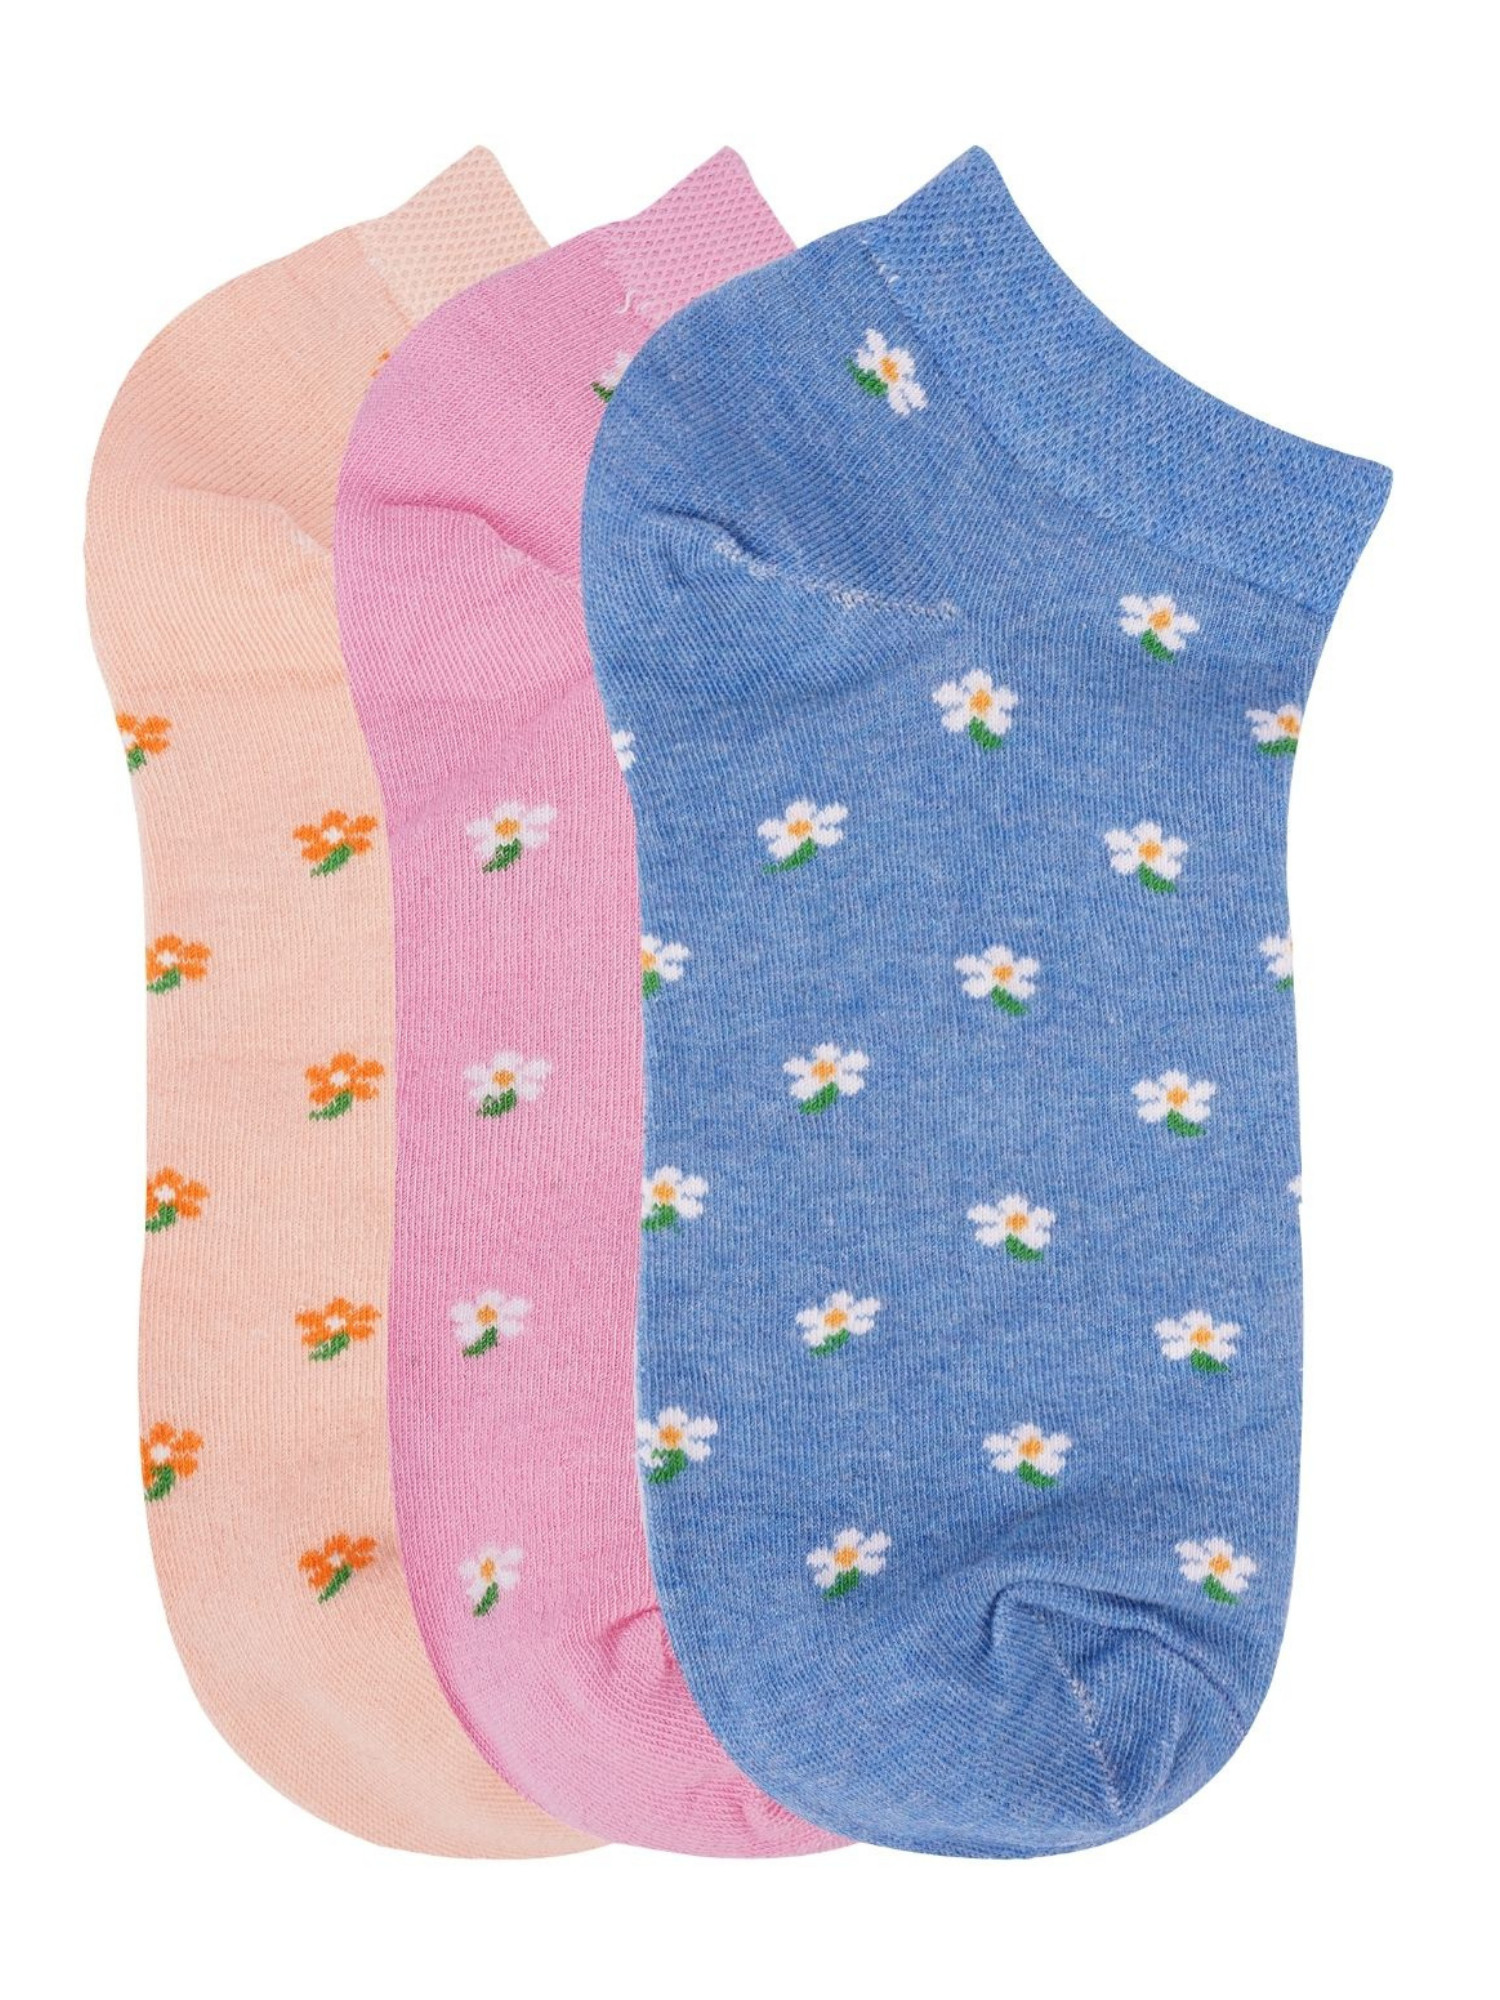 N2S NEXT2SKIN Women's Low Ankle Length Flower Pattern Cotton Socks (Pack of 3) (Peach:Pink:Blue)